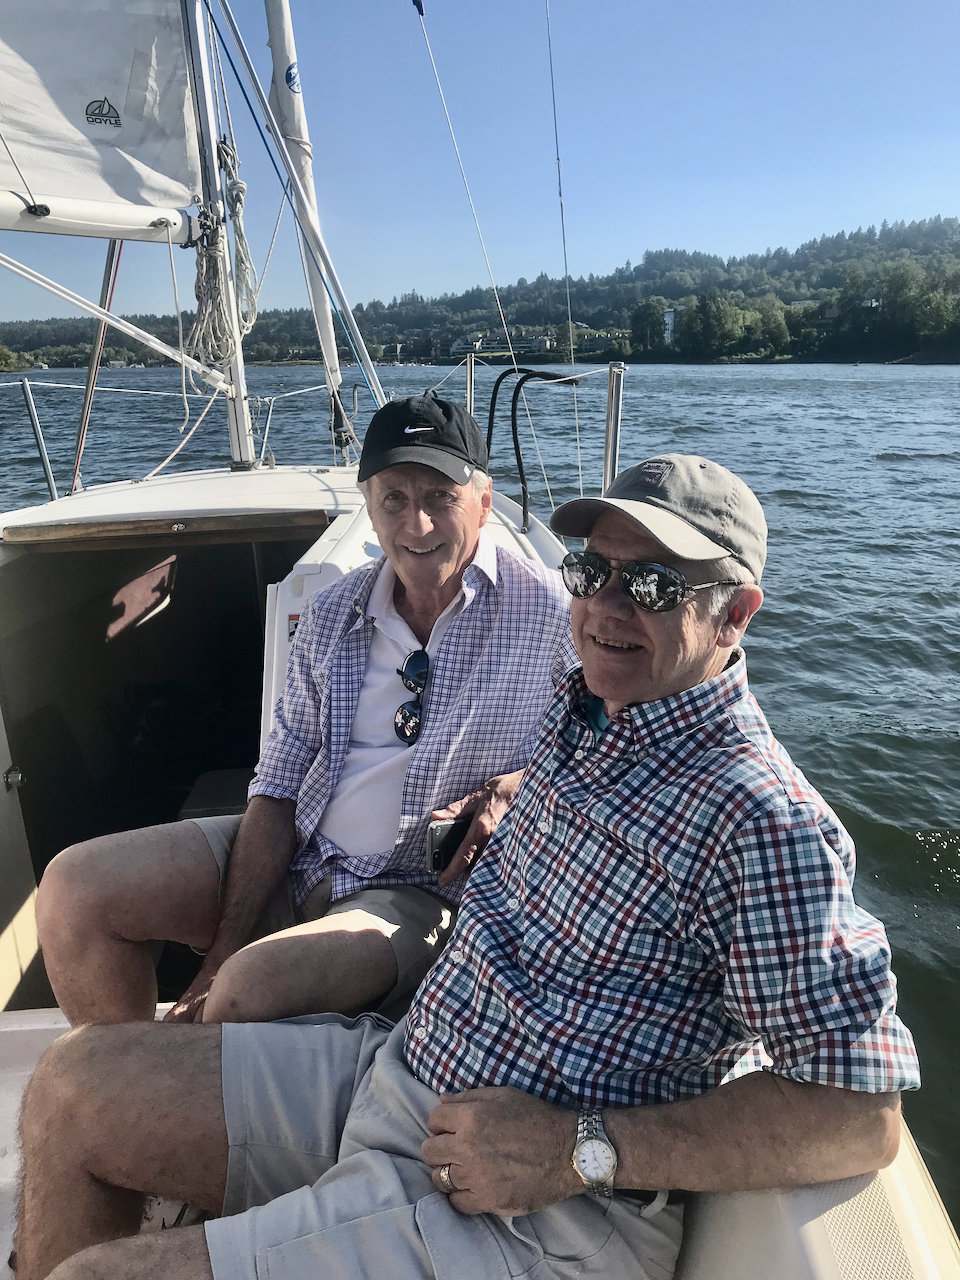 John and Jim sailing.